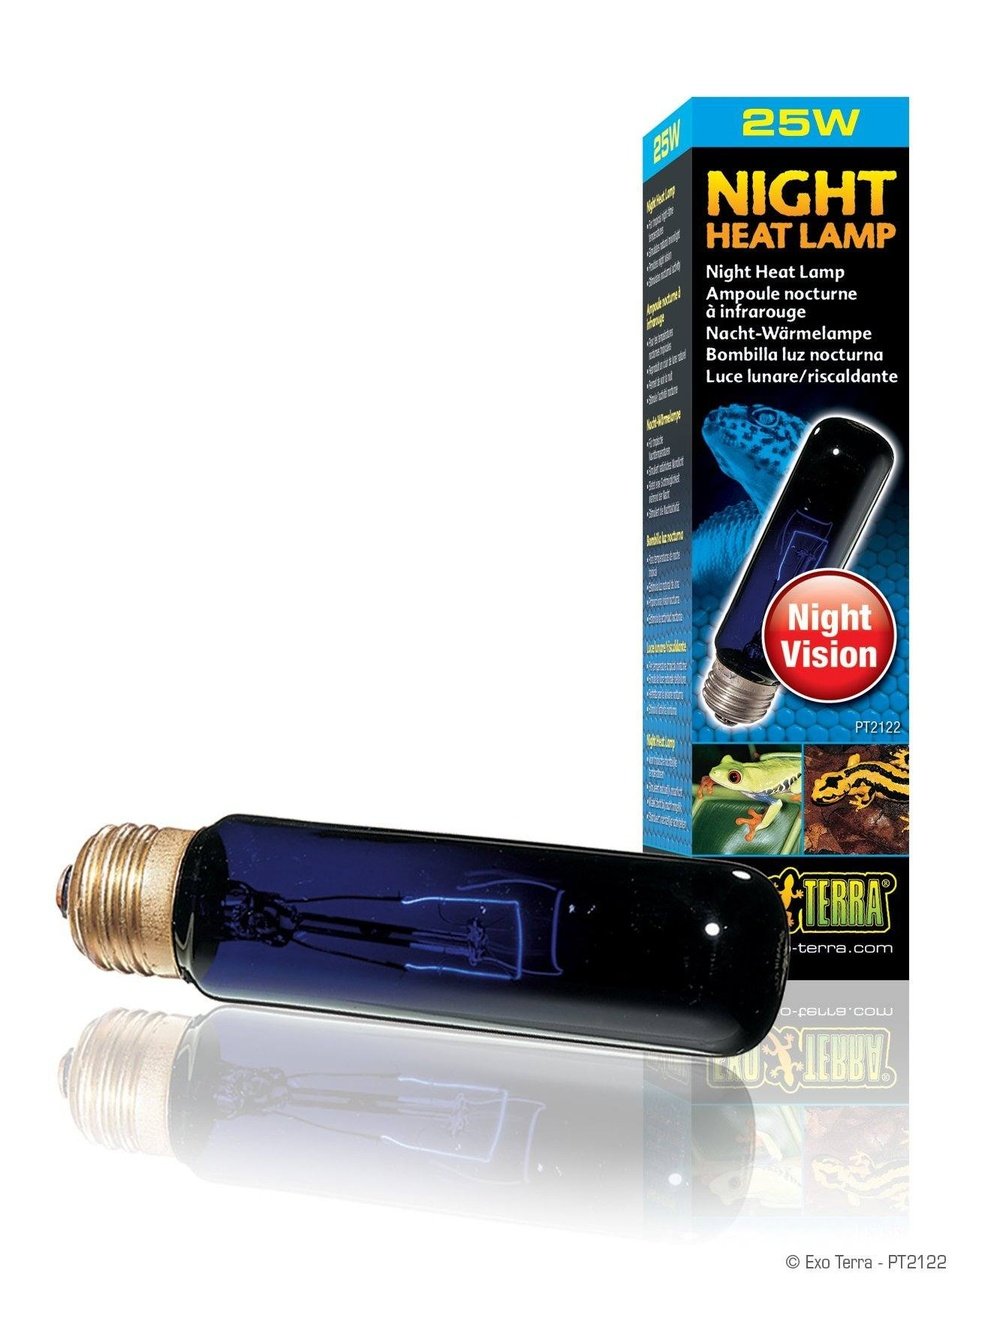 Exo Terra Night Heat Lamp, 25w - Dubia.com